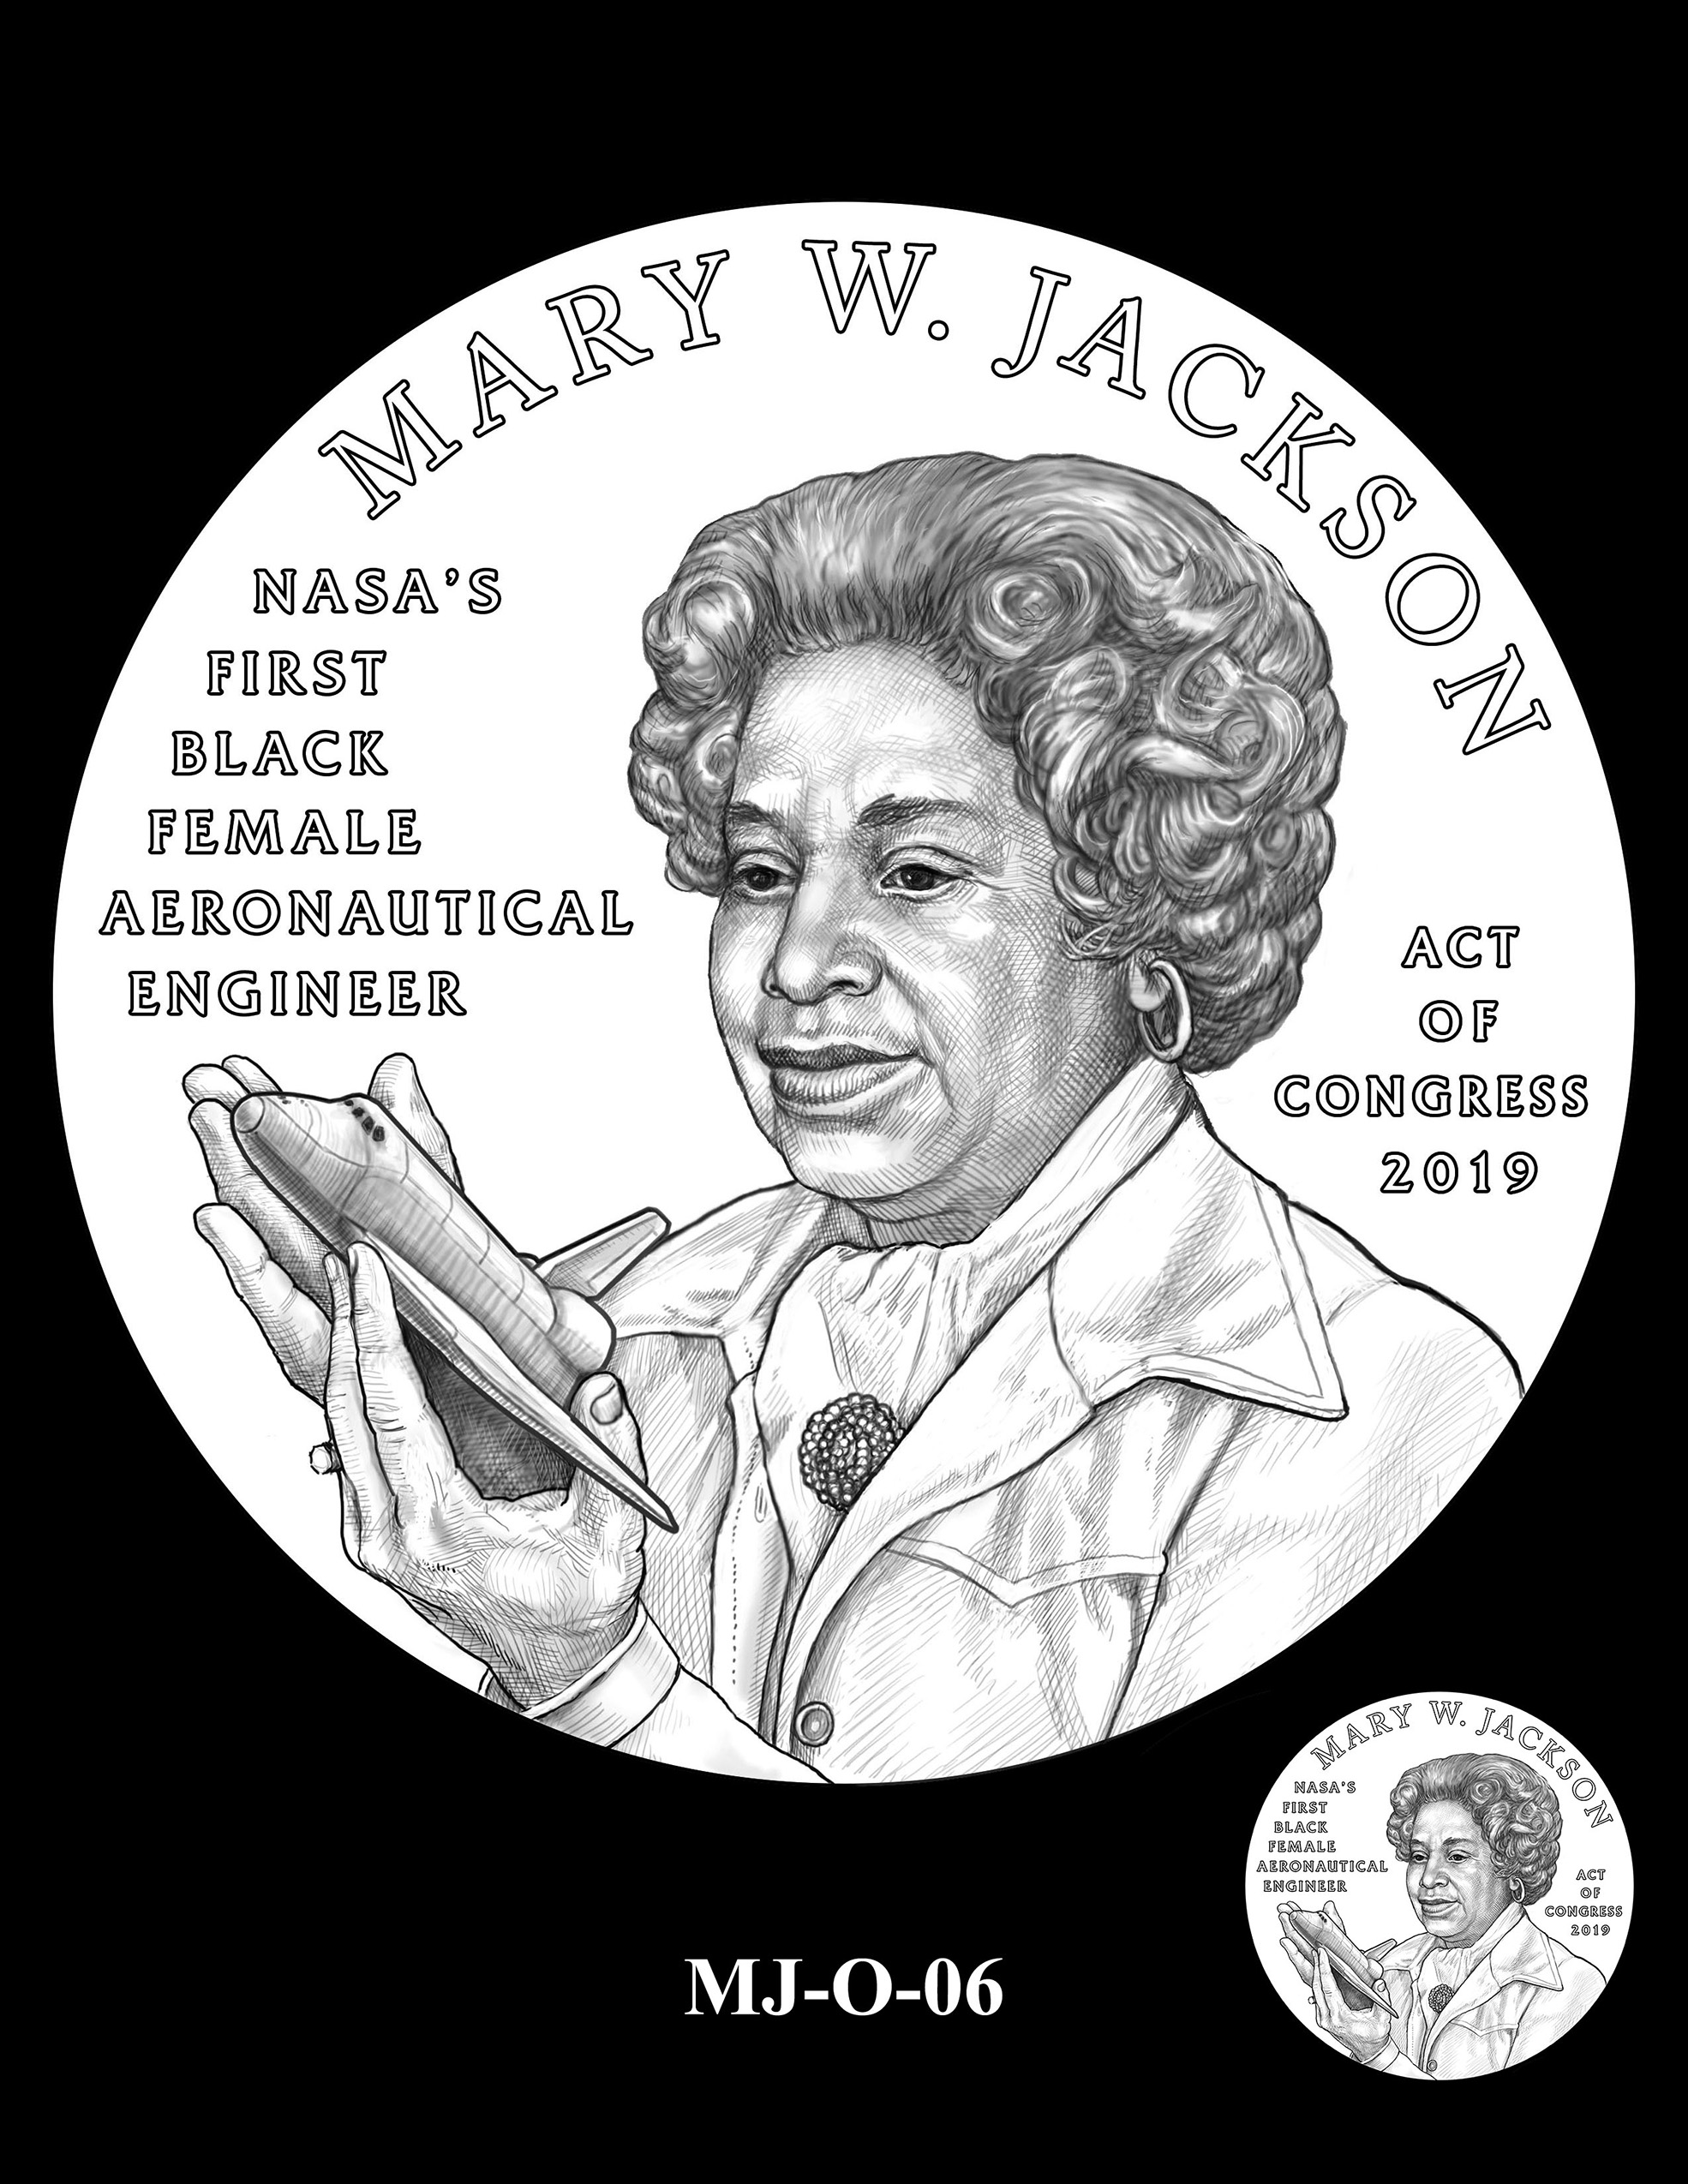 MJ-O-06 -- Mary W. Jackson Congressional Gold Medal